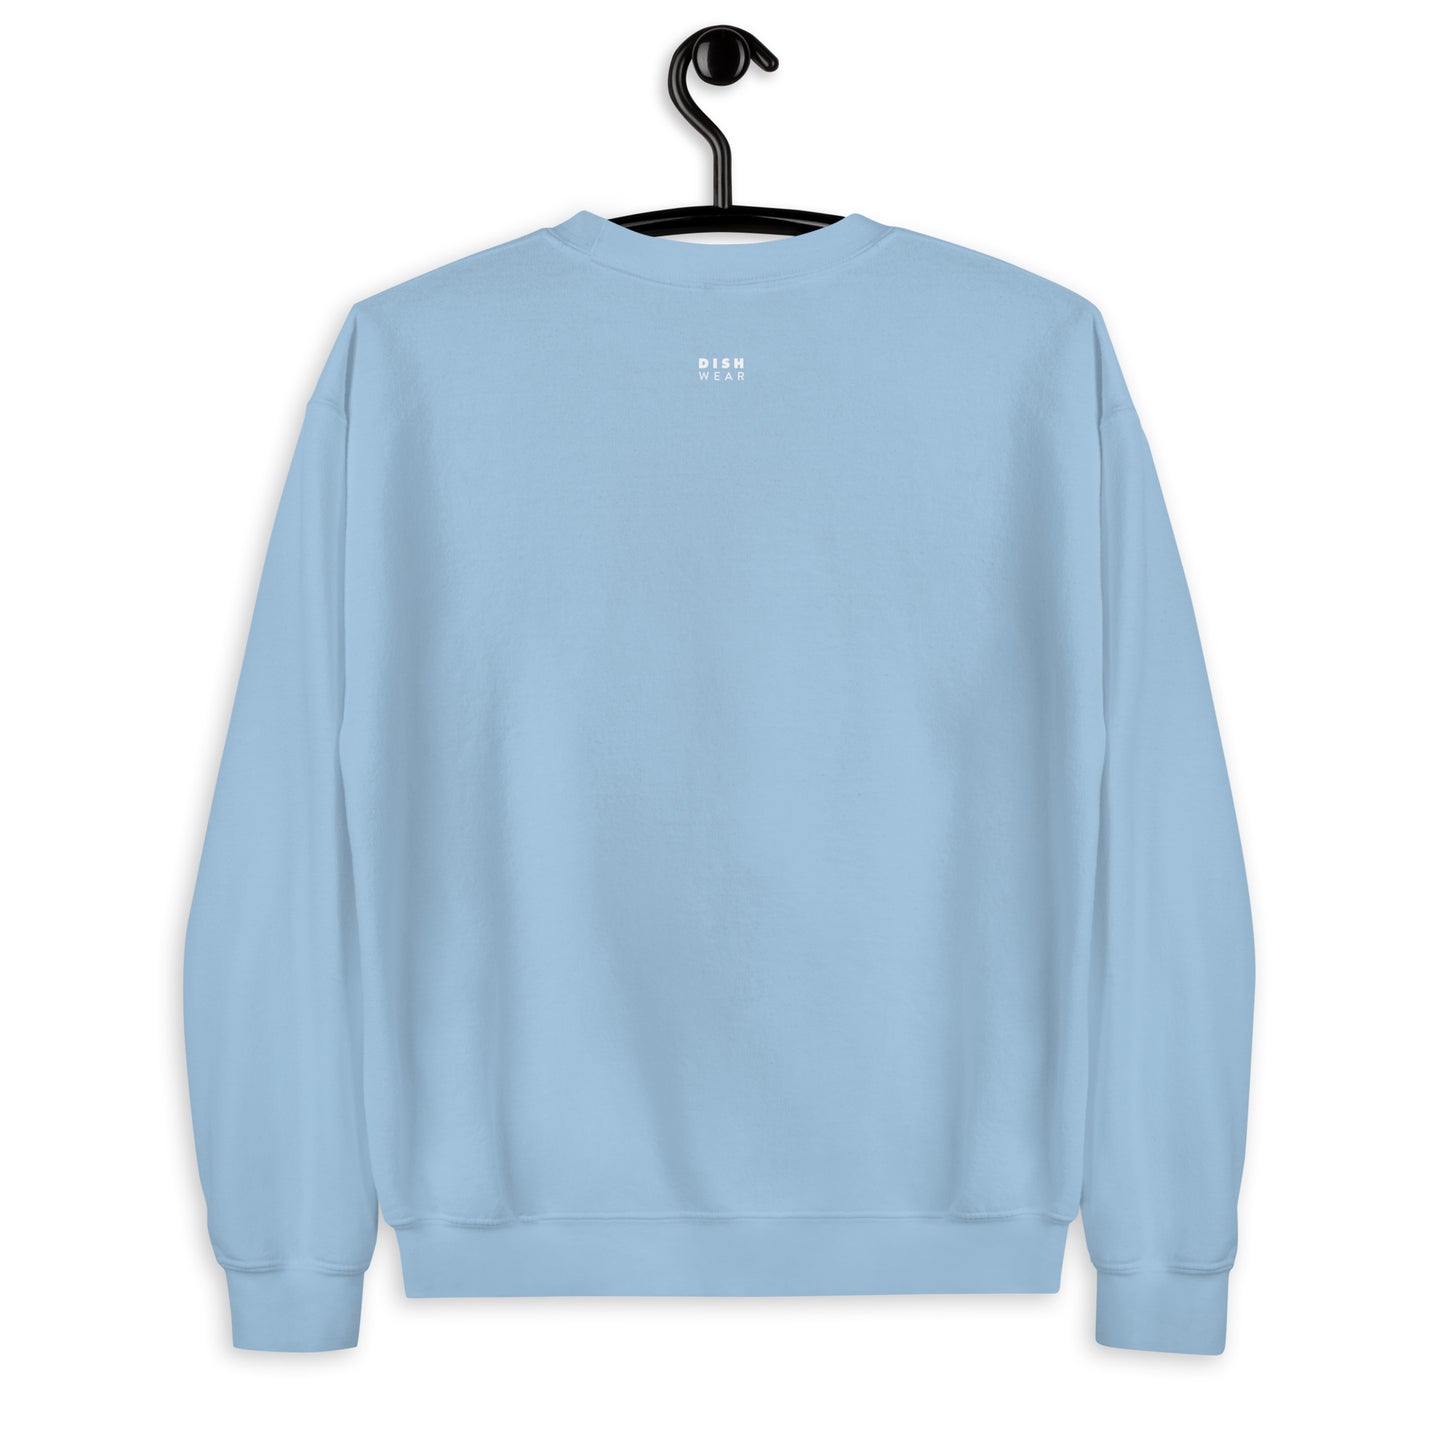 Mimosa Sweatshirt - Straight Font